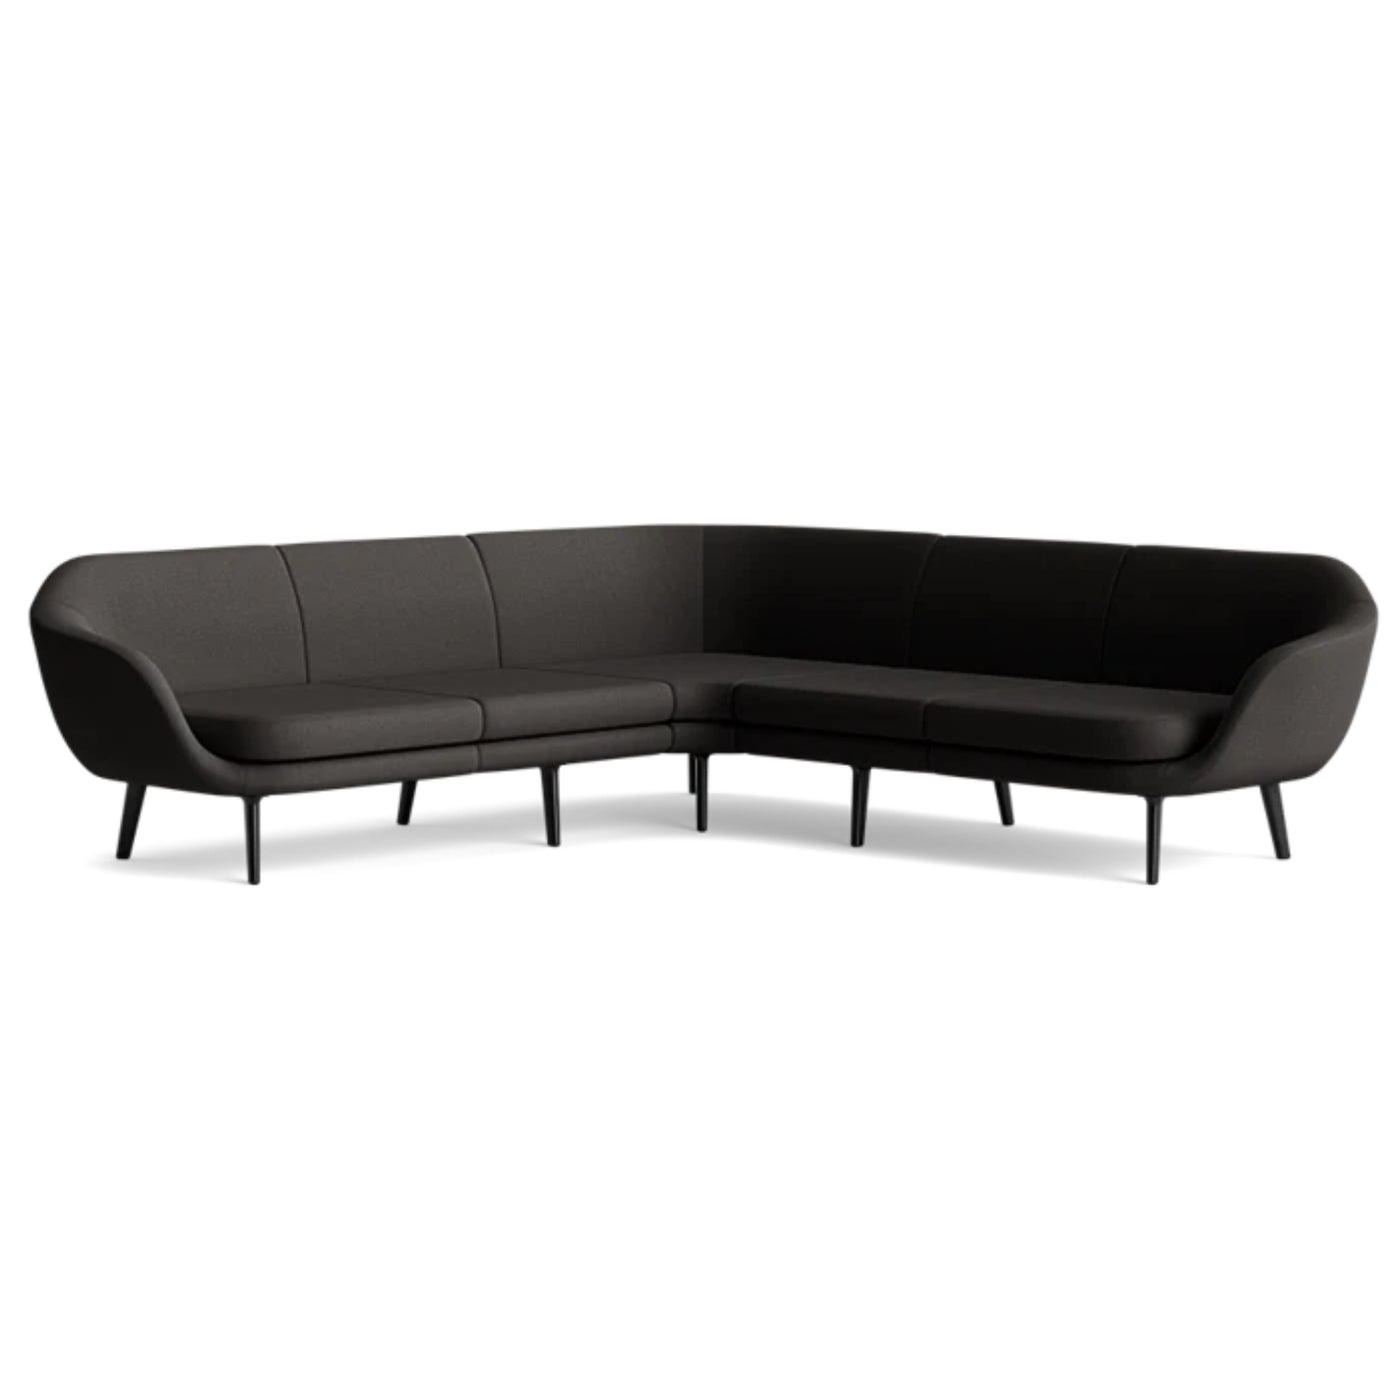 Normann Copenhagen Sum Modular Corner Sofa at someday designs. #colour_steelcut-trio-383